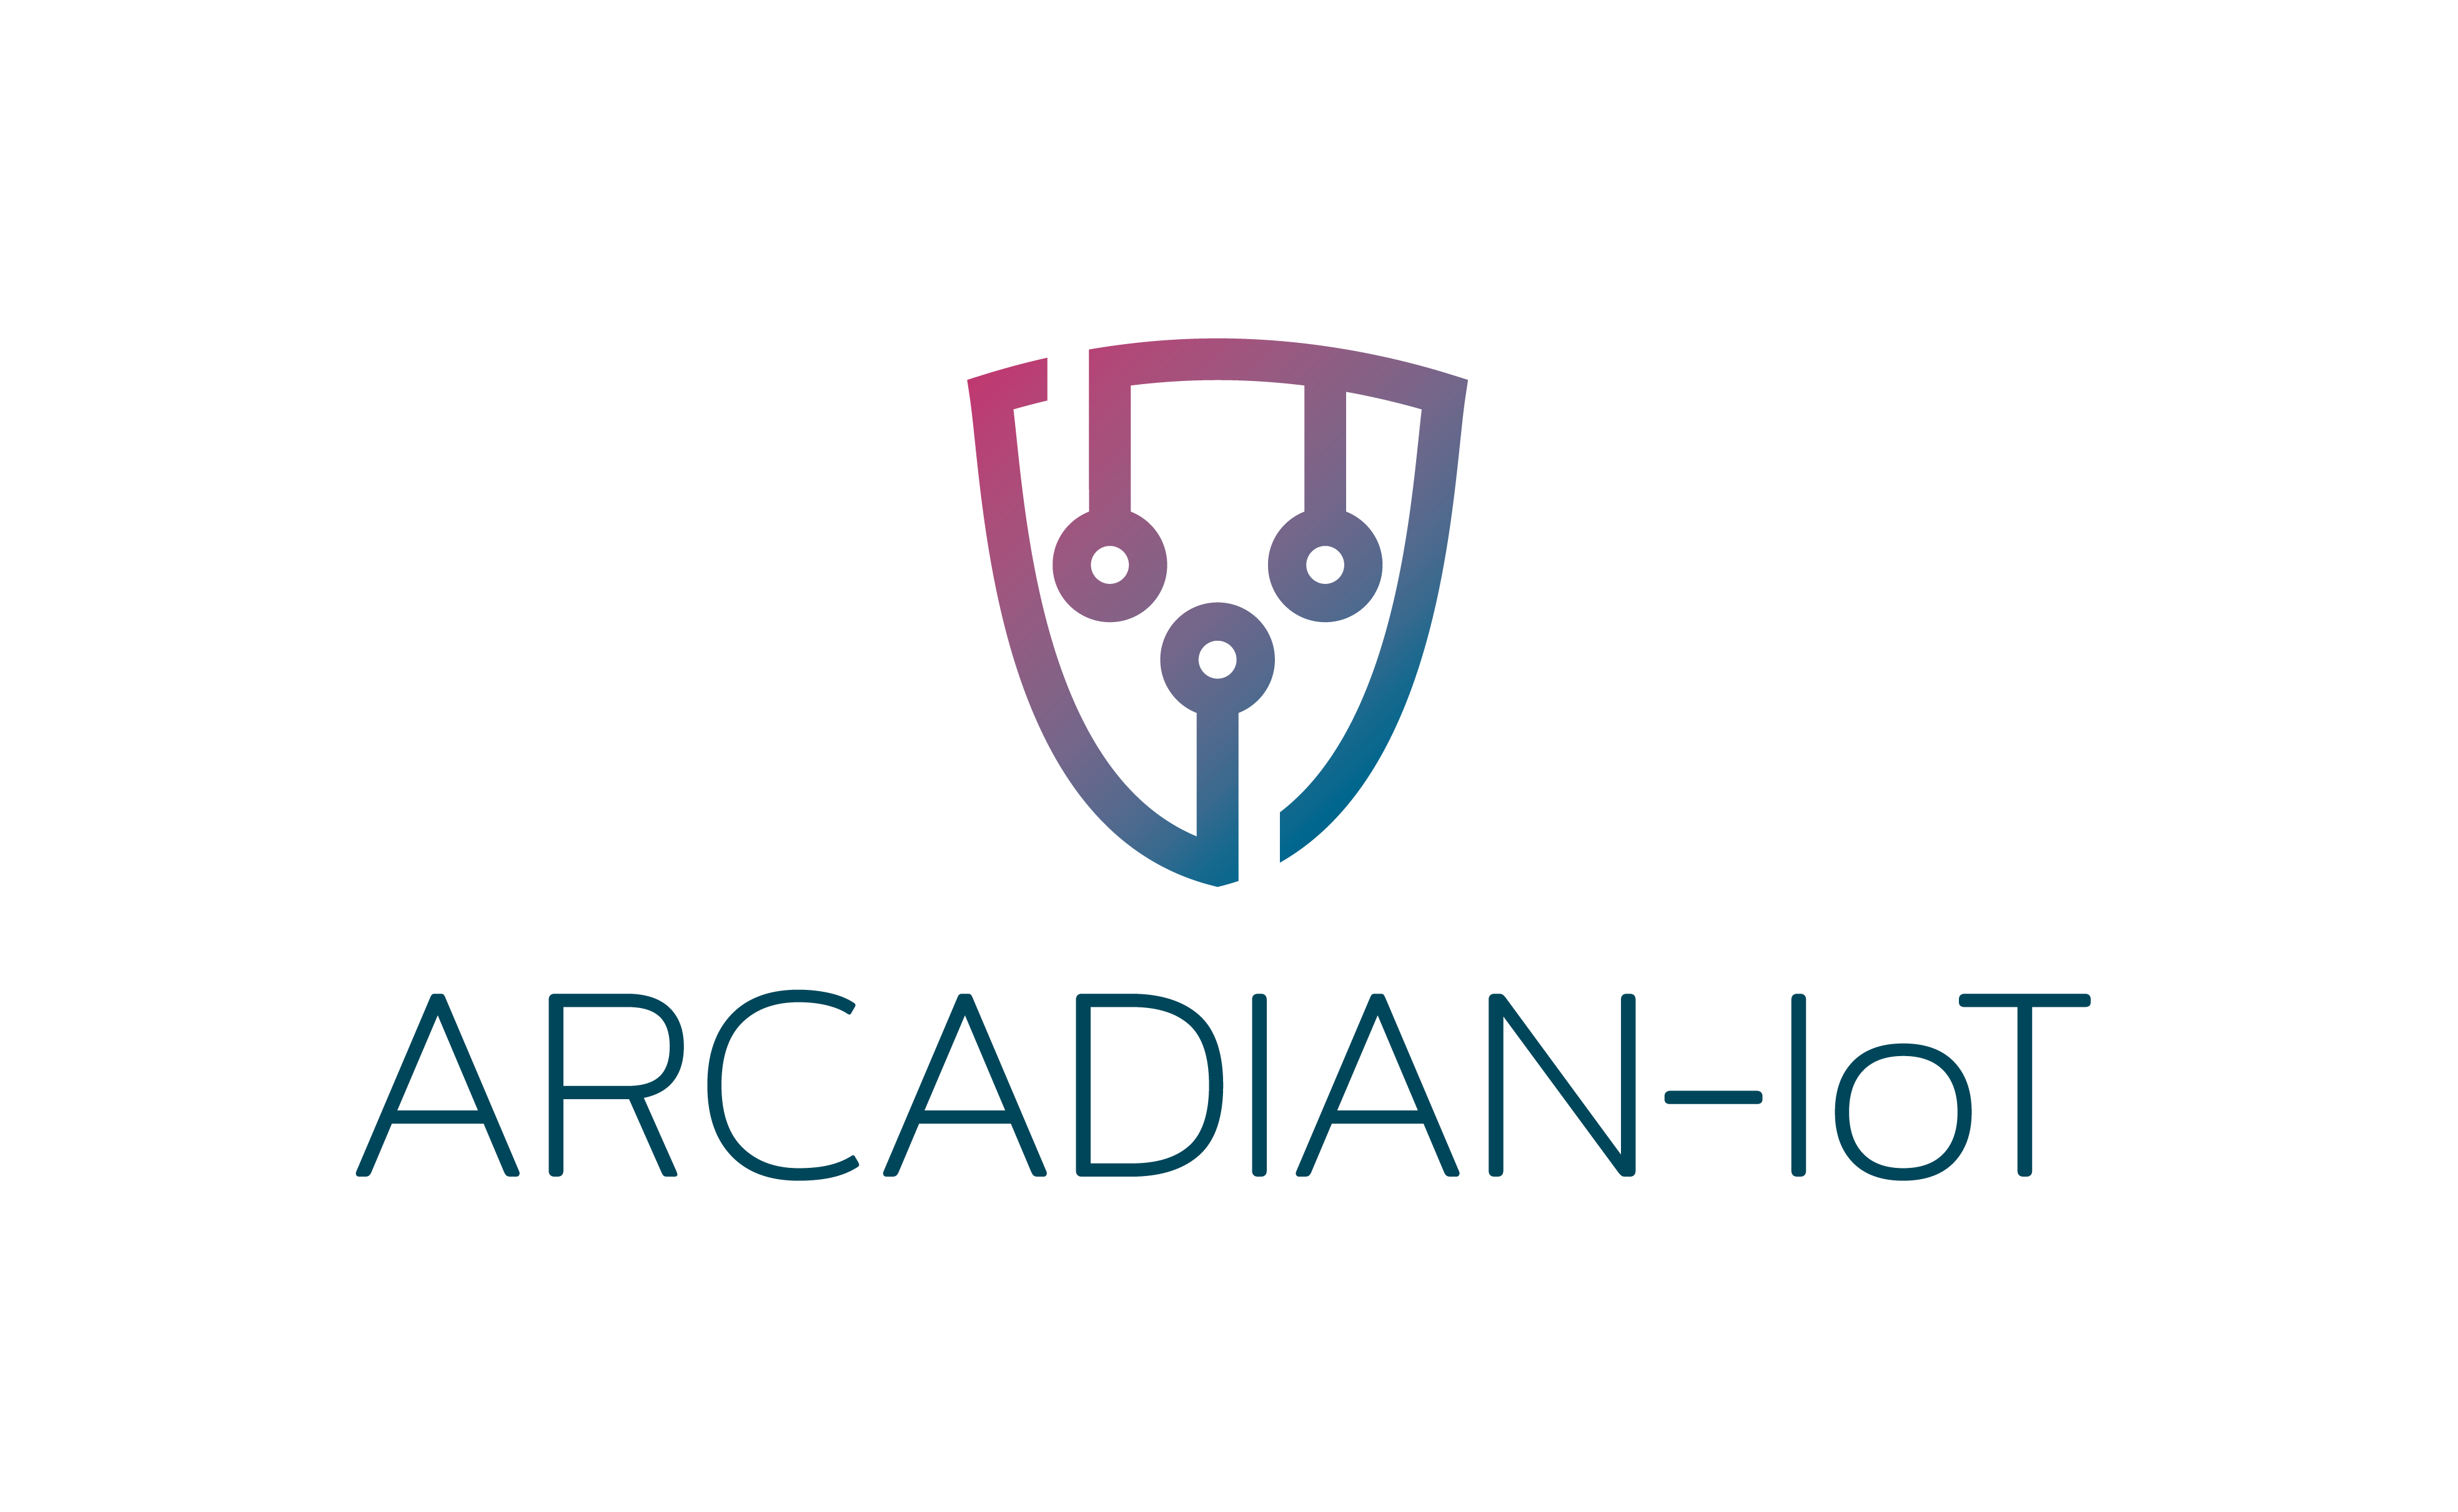 ARCADIAN-IoT Logo